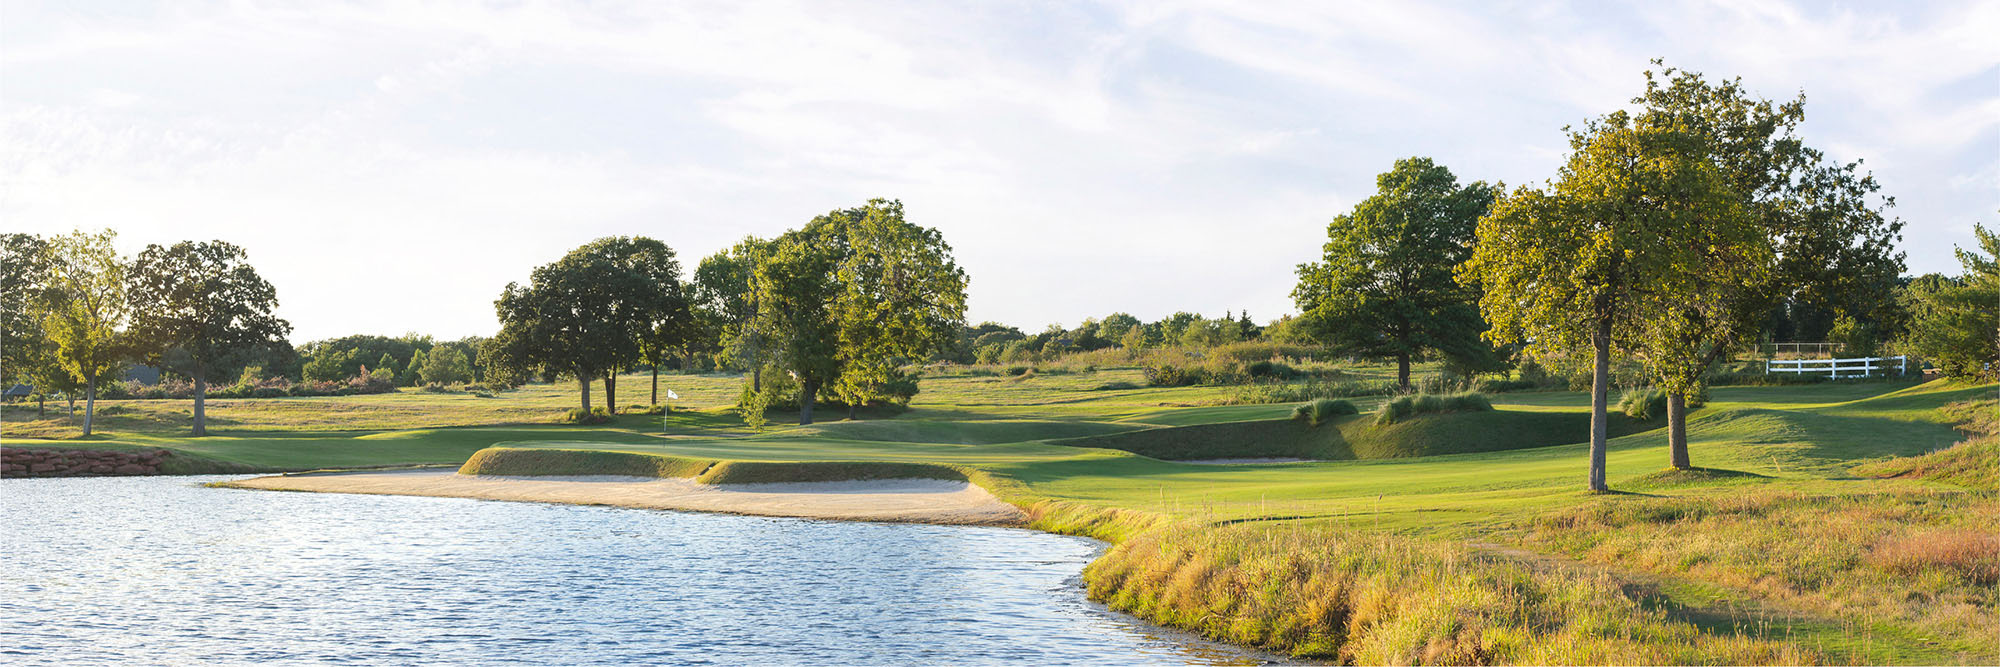 Golf Course Image - Oak Tree National No. 8